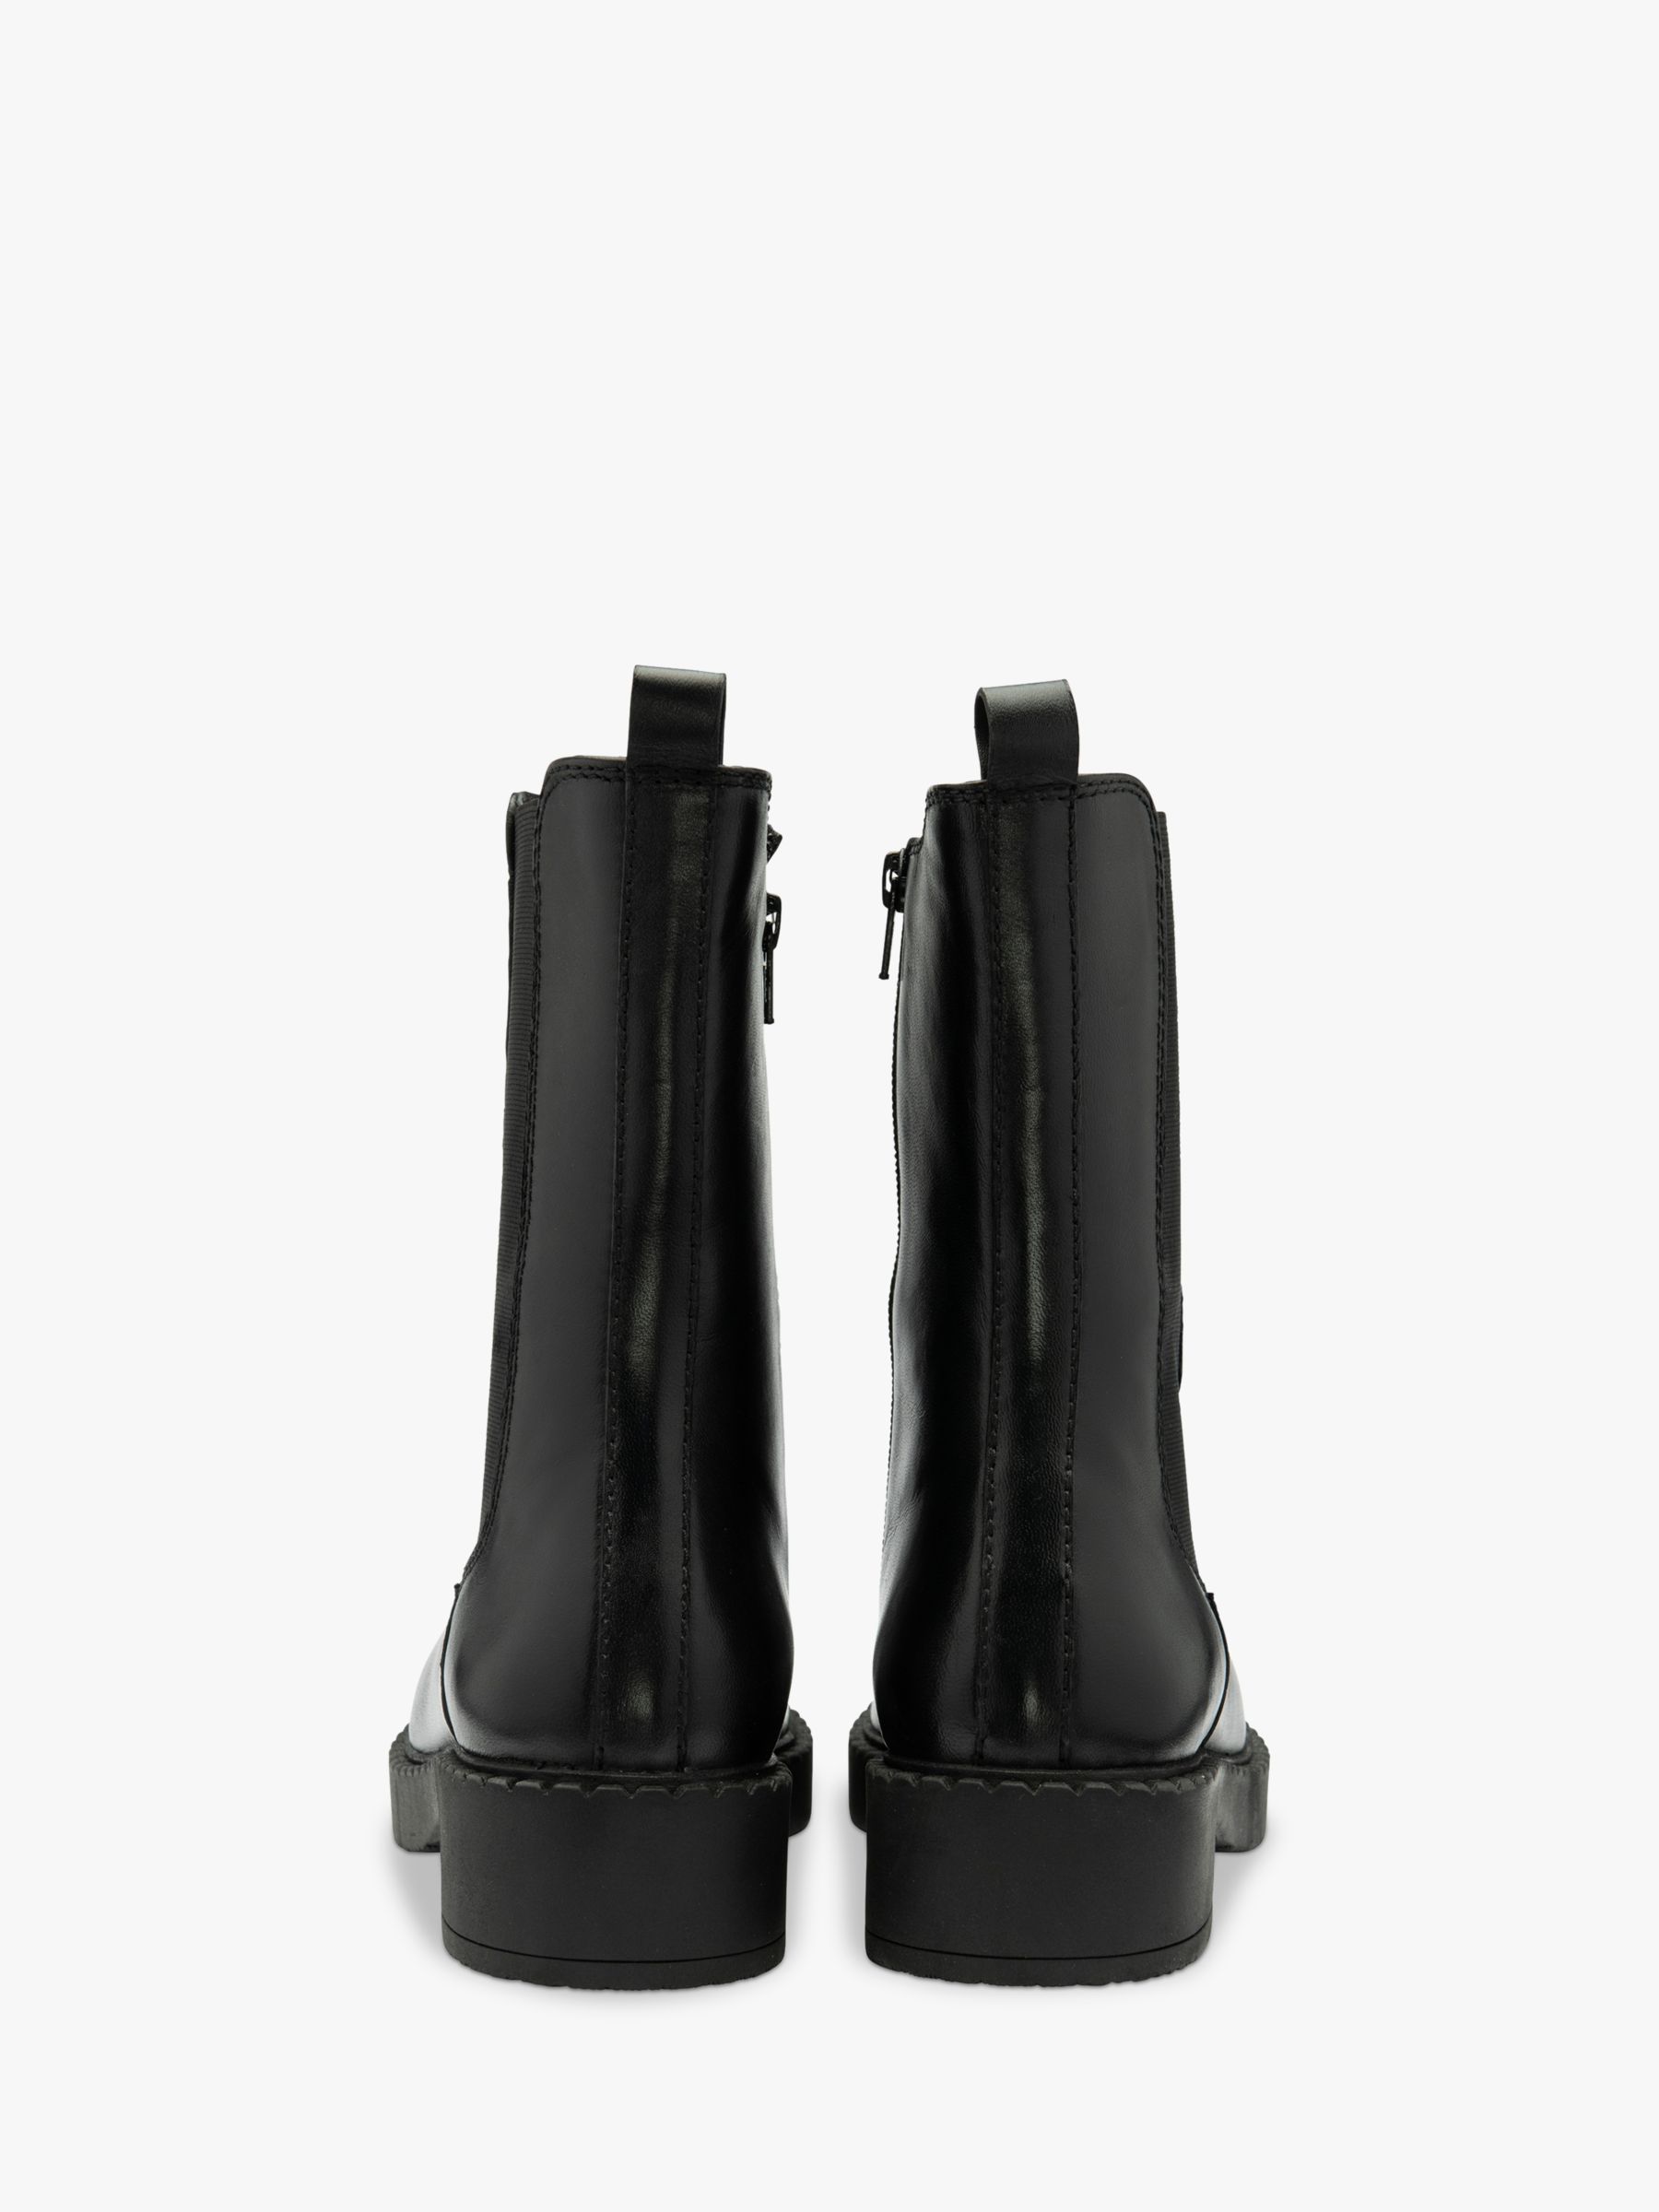 Ravel Garvie Leather Mid-Calf Boots, Black at John Lewis & Partners